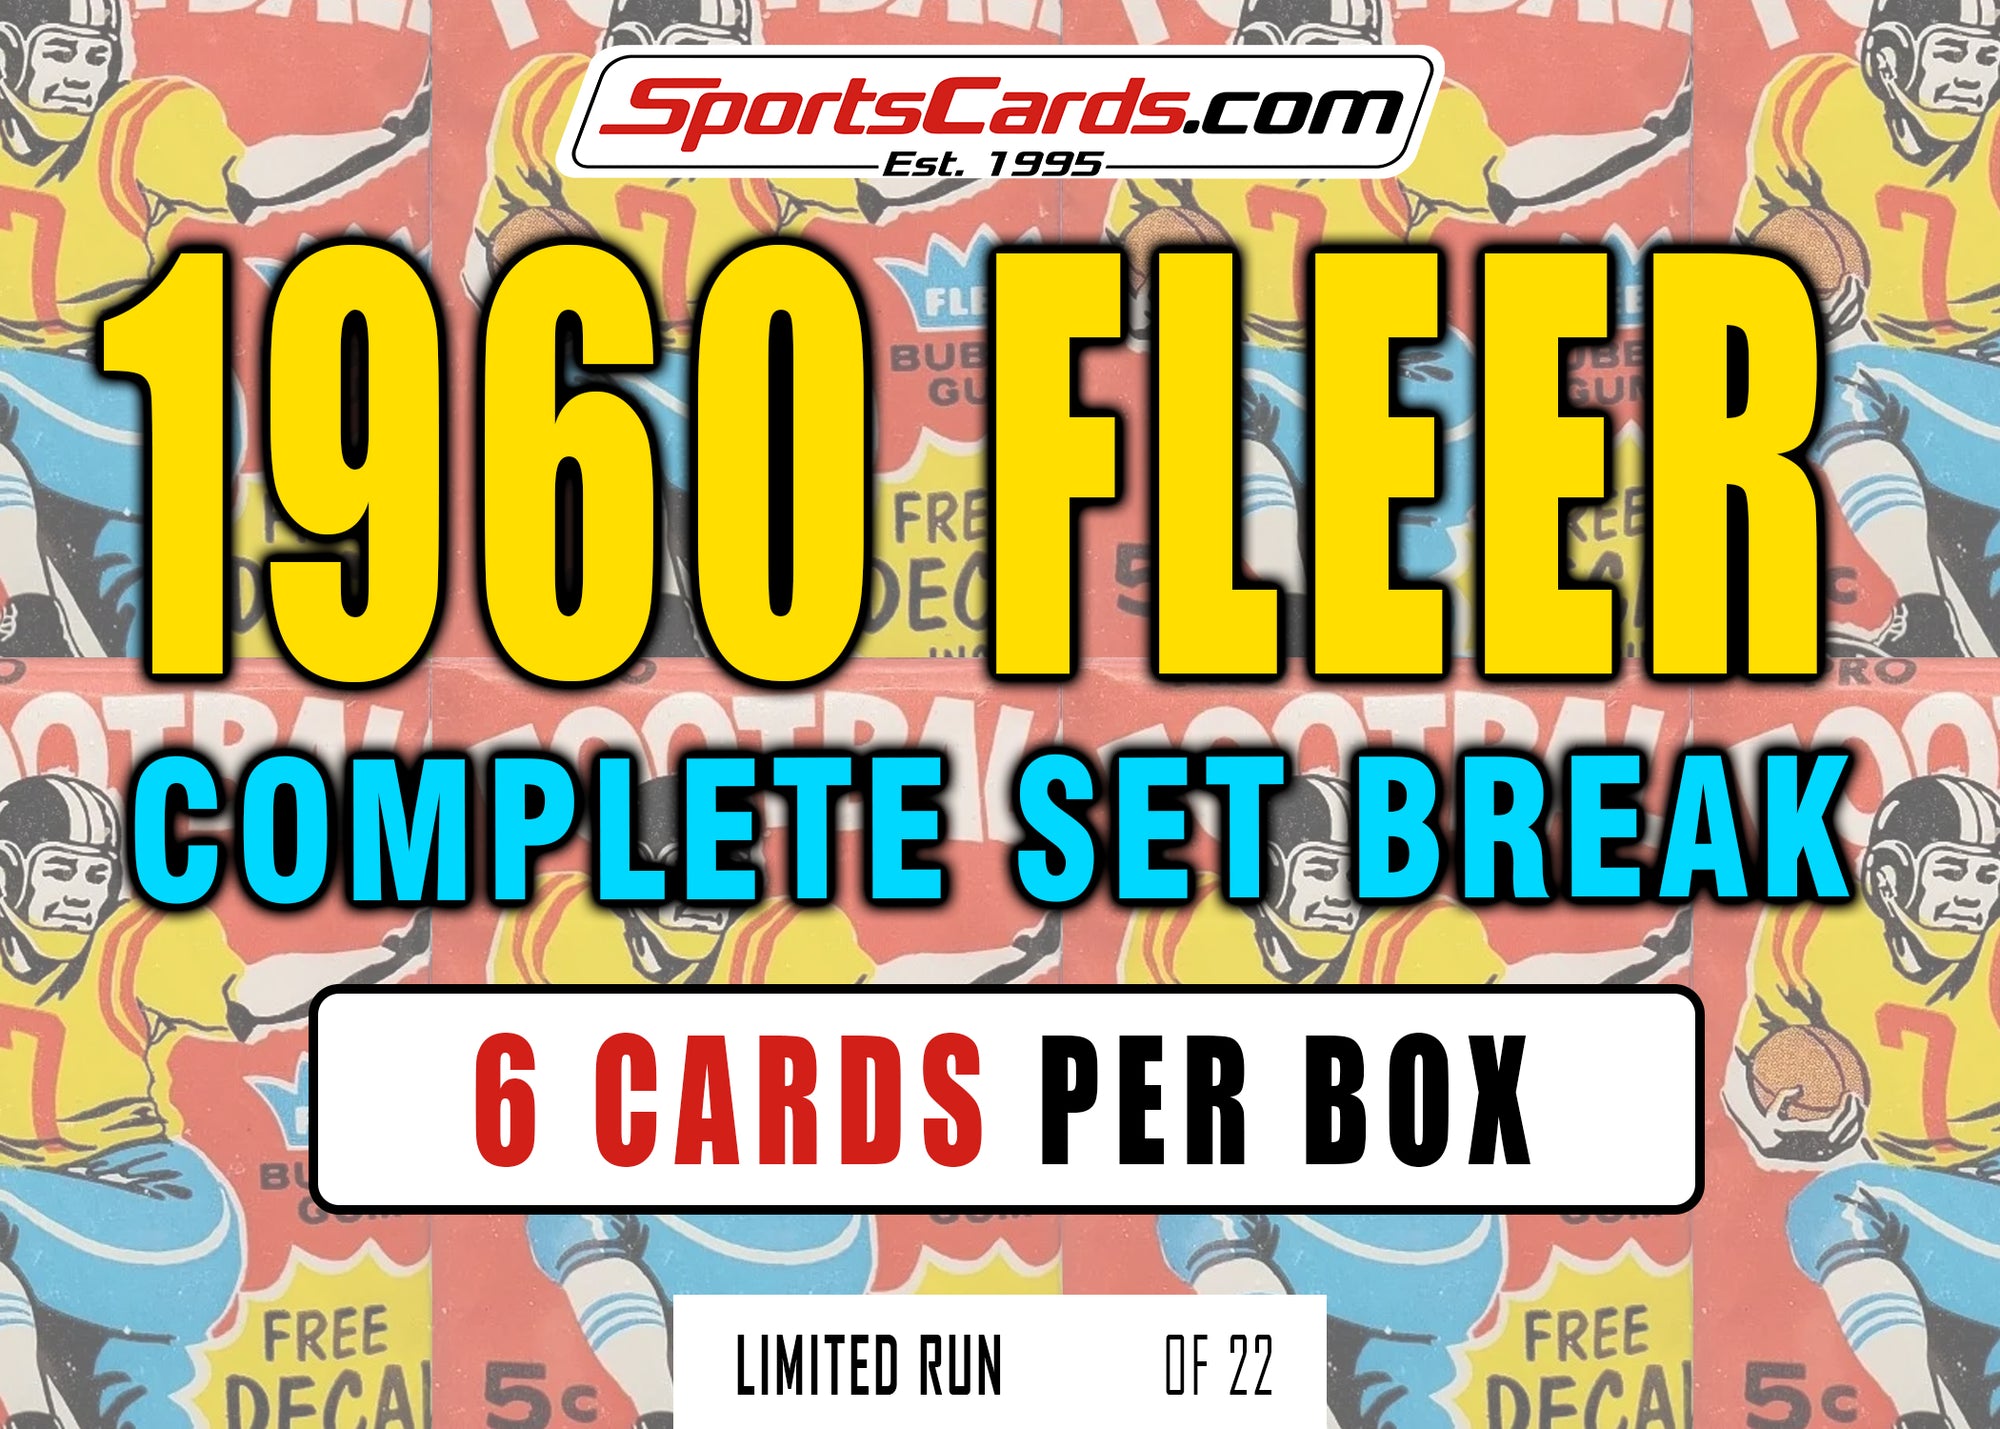 1960 FLEER FOOTBALL COMPLETE SET BREAK - 6 CARDS PER BOX!